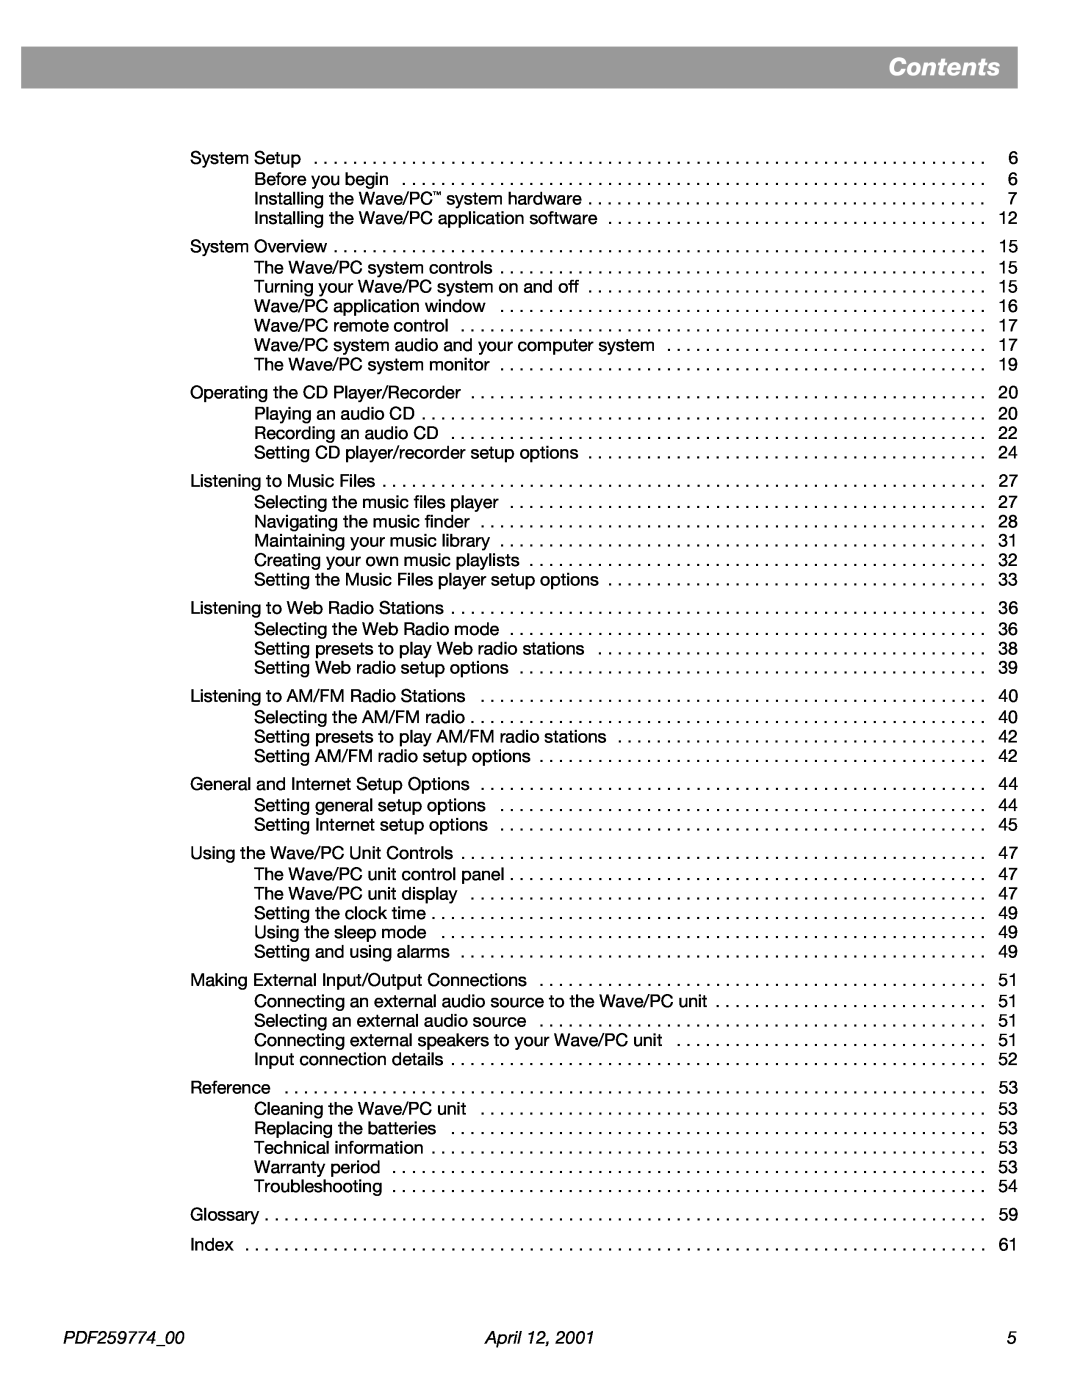 Bose PDF259774_00 manual Contents 